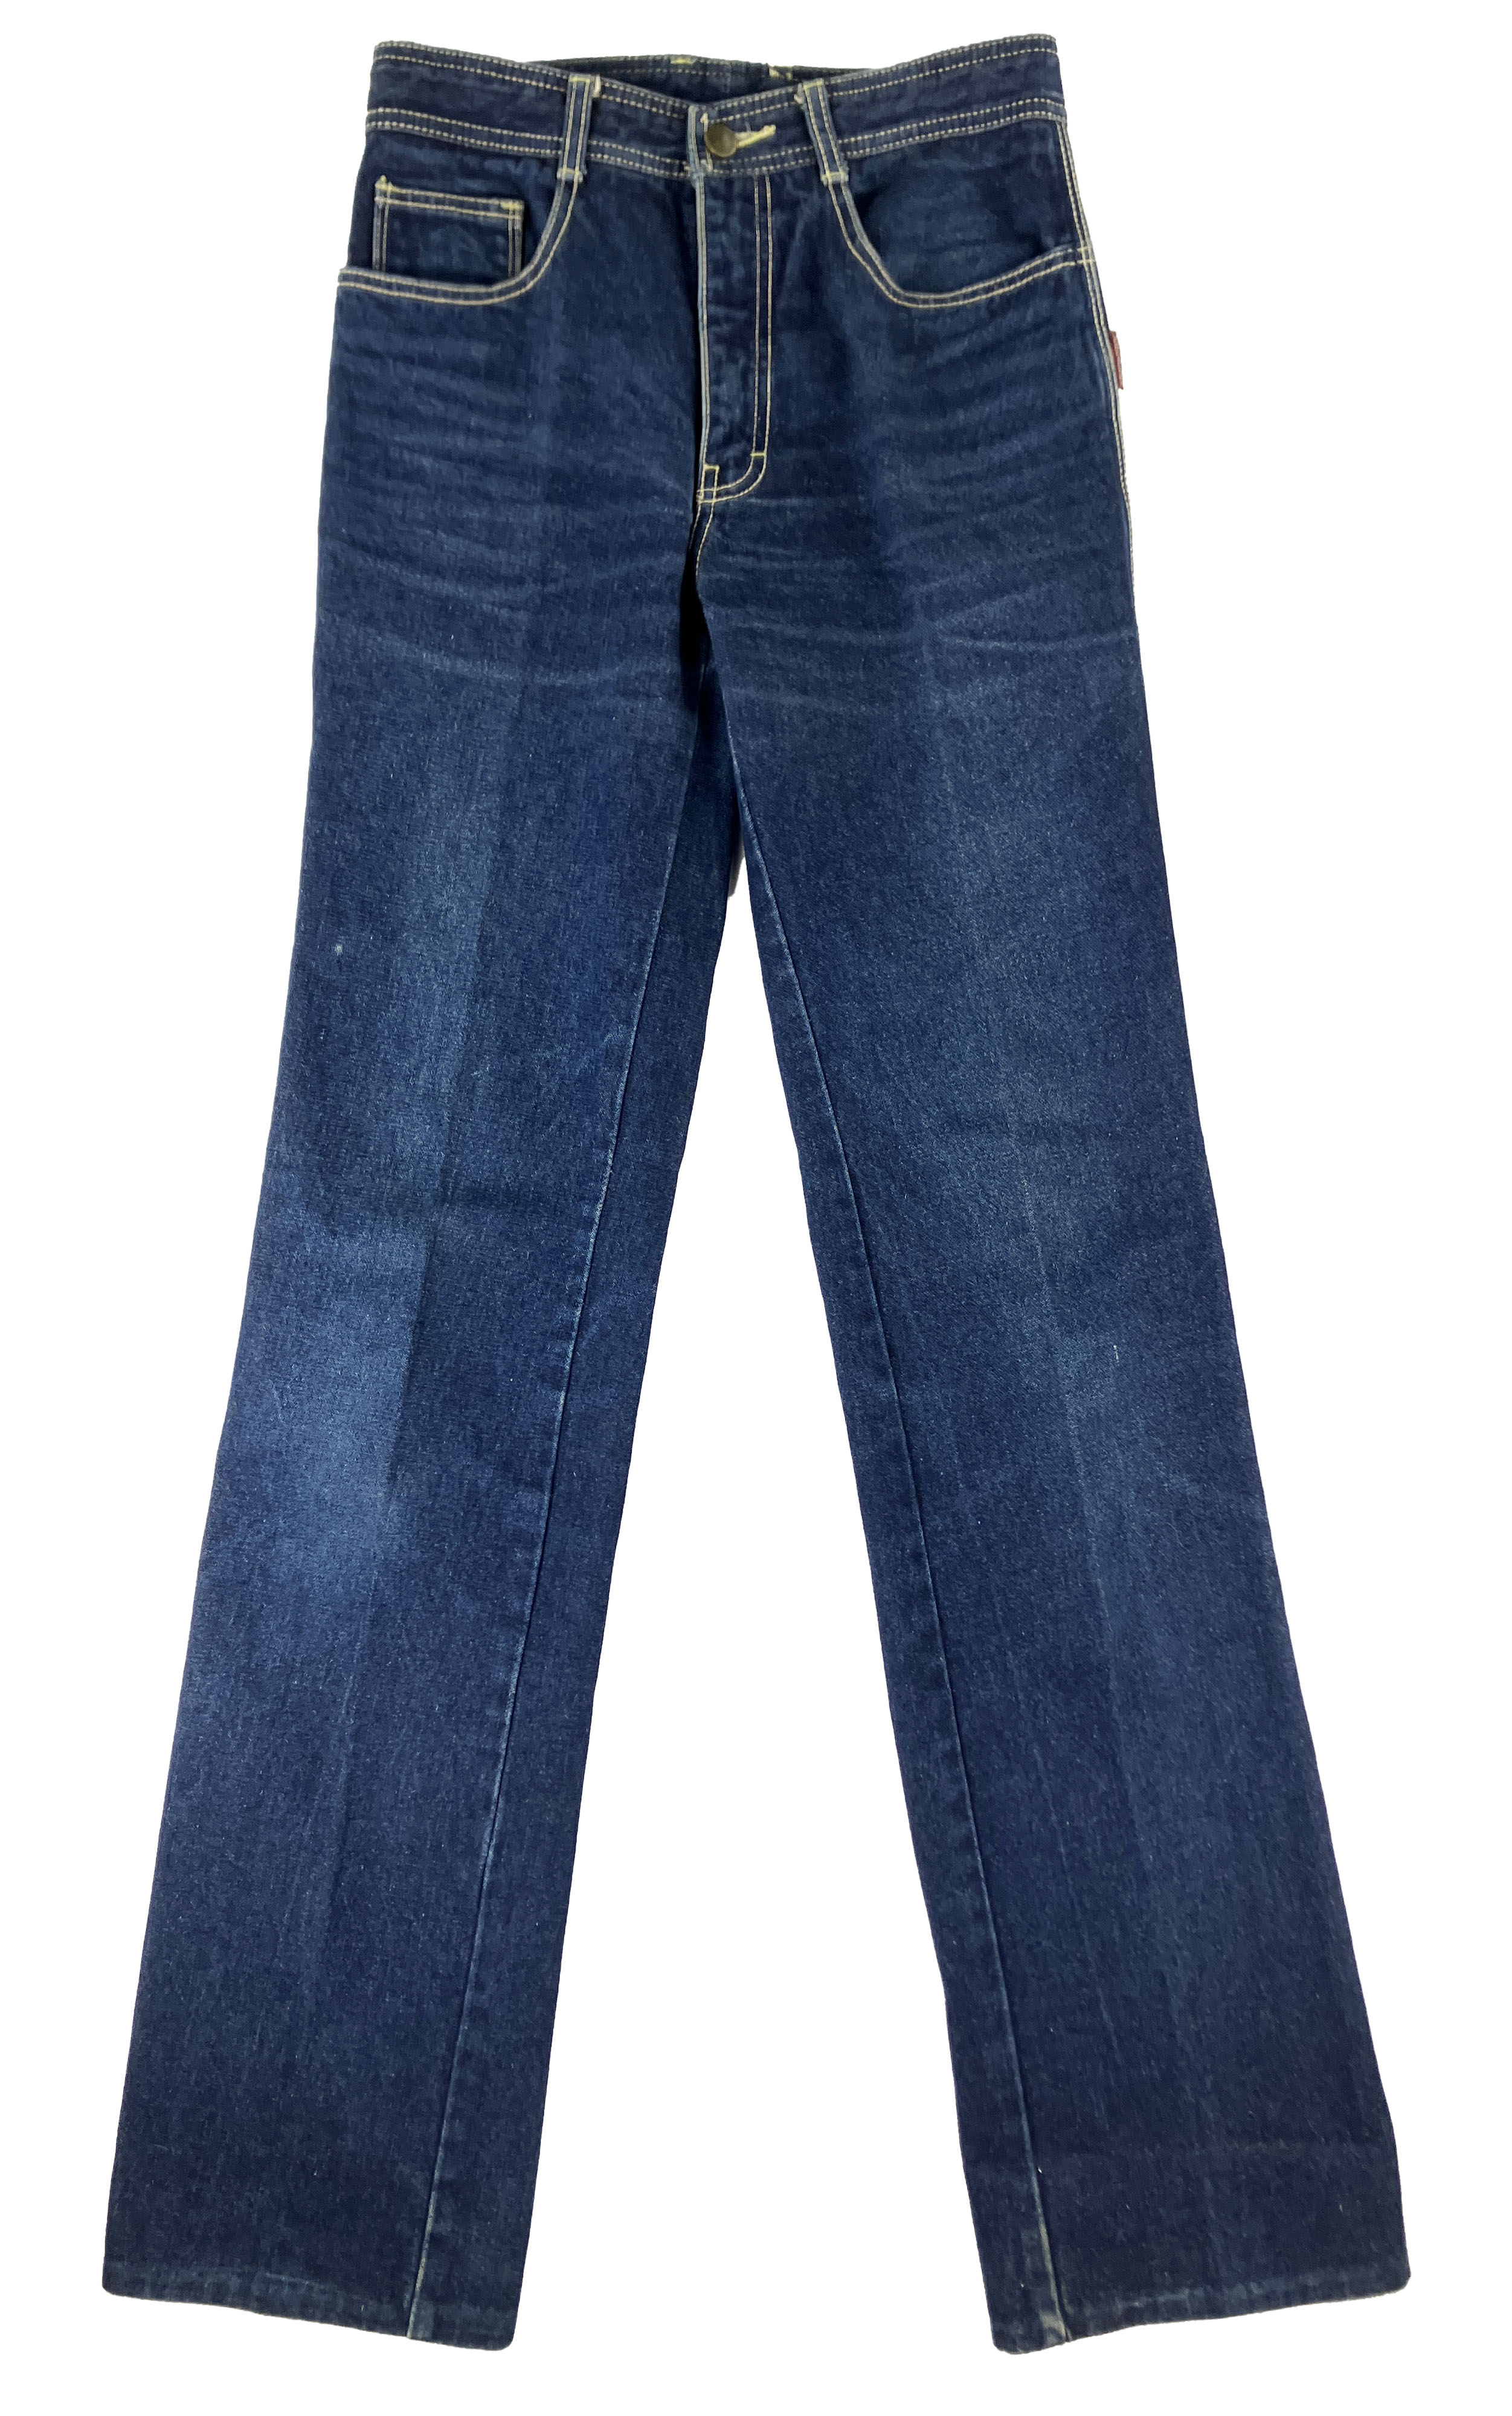 Jordache Jeans Vintage Youth Size 3